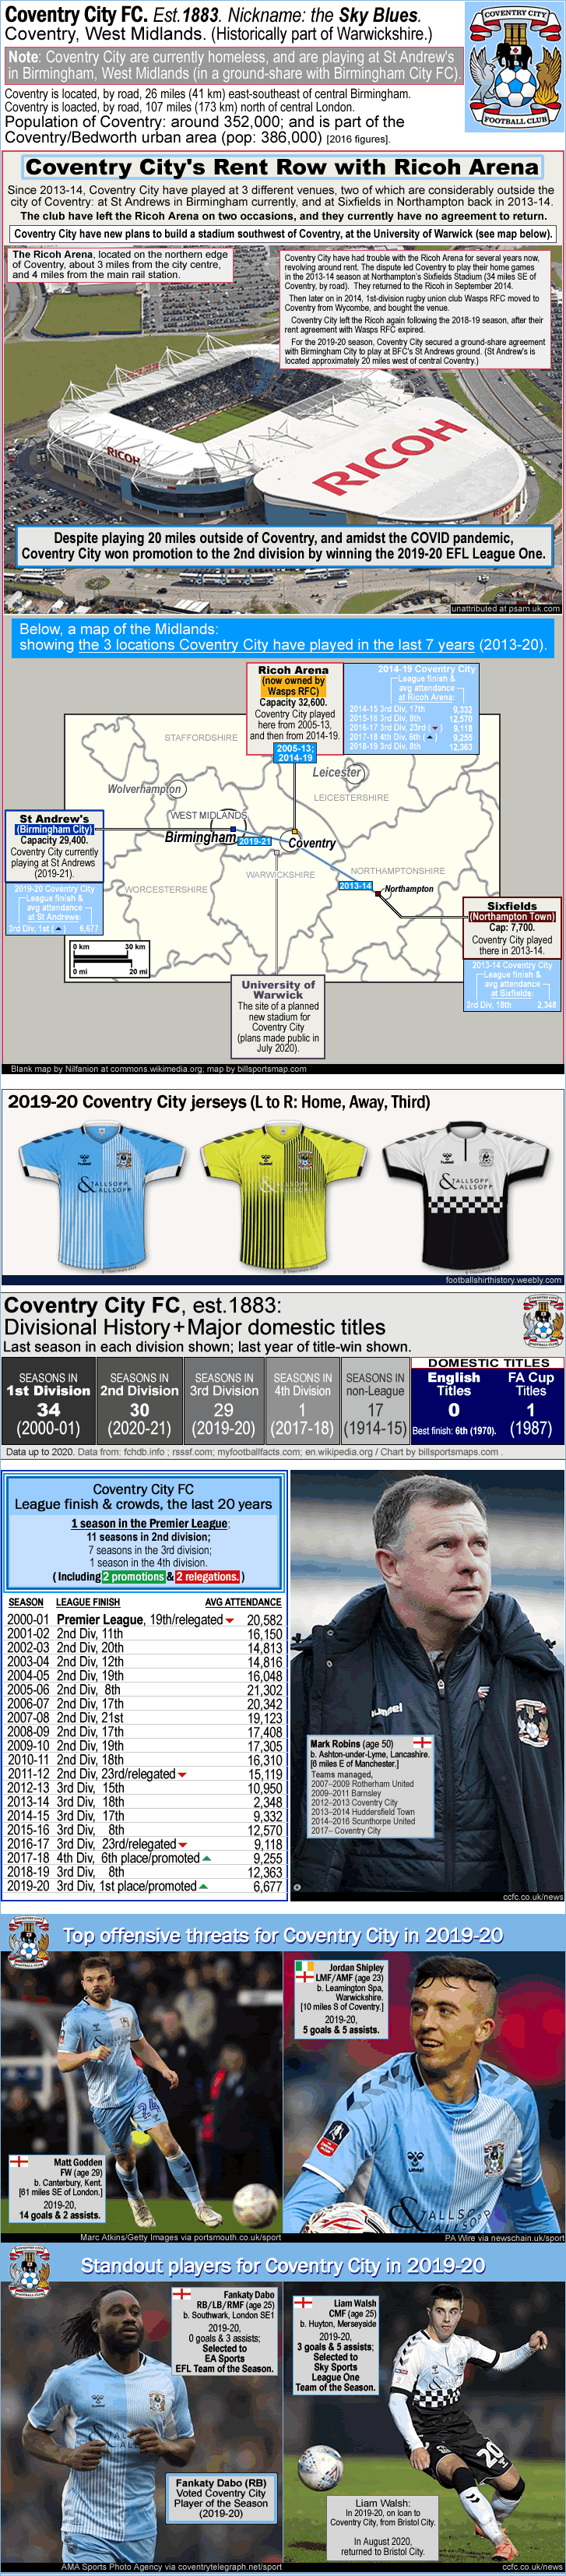 coventy-city_promoted-2020_ricoh-arena-dispute-with-map-of-ccfc-venues_mark-robins_matt-godden_jordan-shipley_fankaty-dabo_liam-walsh_f_.gif